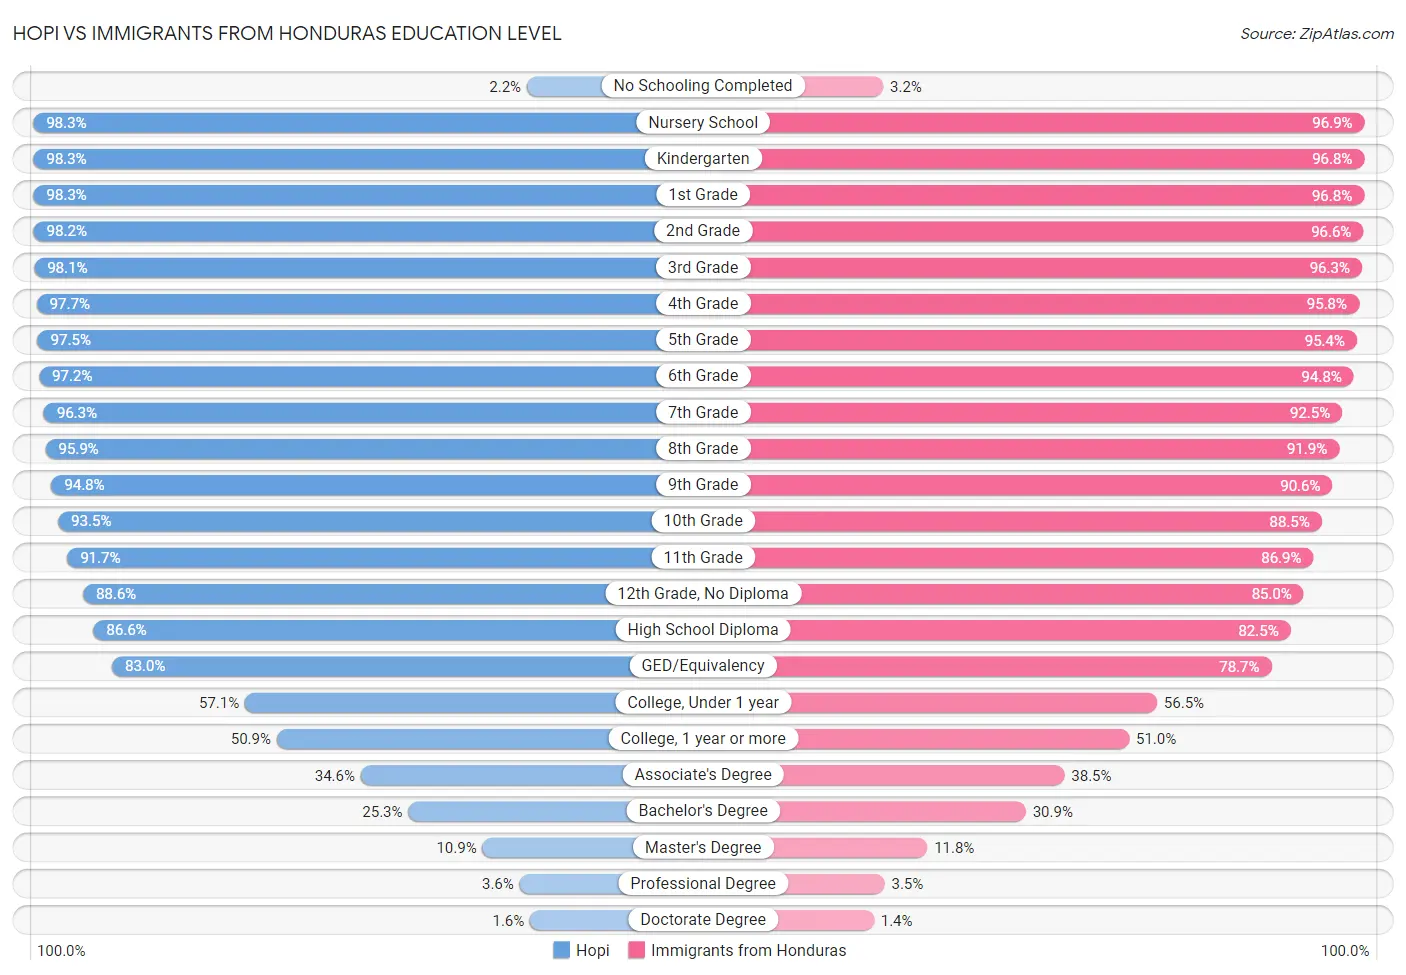 Hopi vs Immigrants from Honduras Education Level